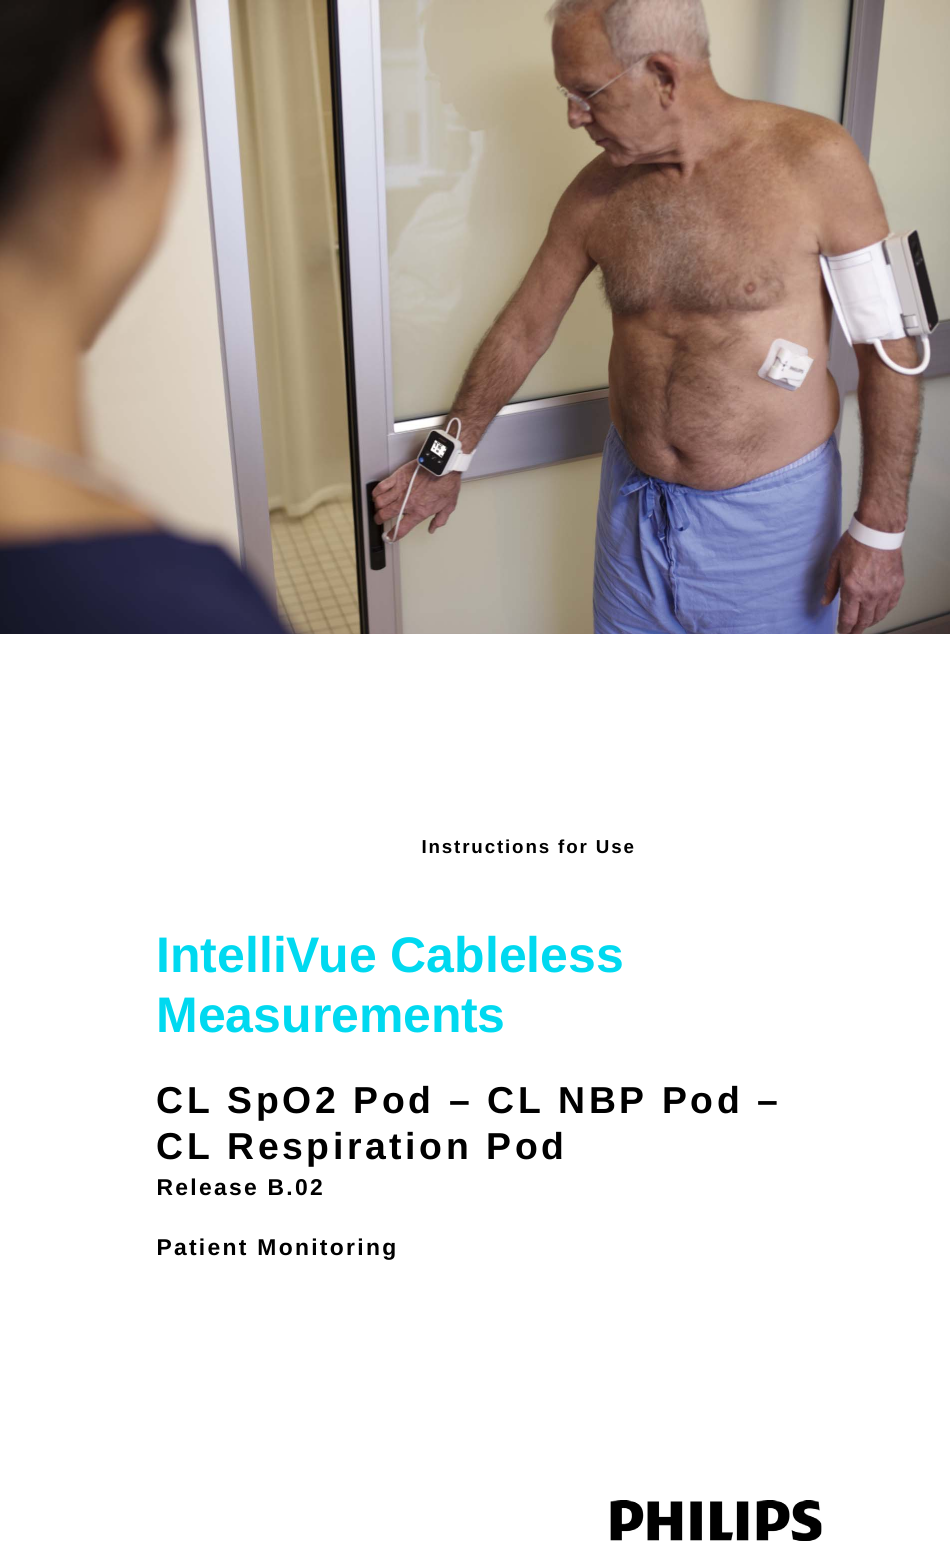 Instructions for Use IntelliVue Cableless MeasurementsCL SpO2 Pod – CL NBP Pod – CL Respiration PodRelease B.02Patient Monitoring